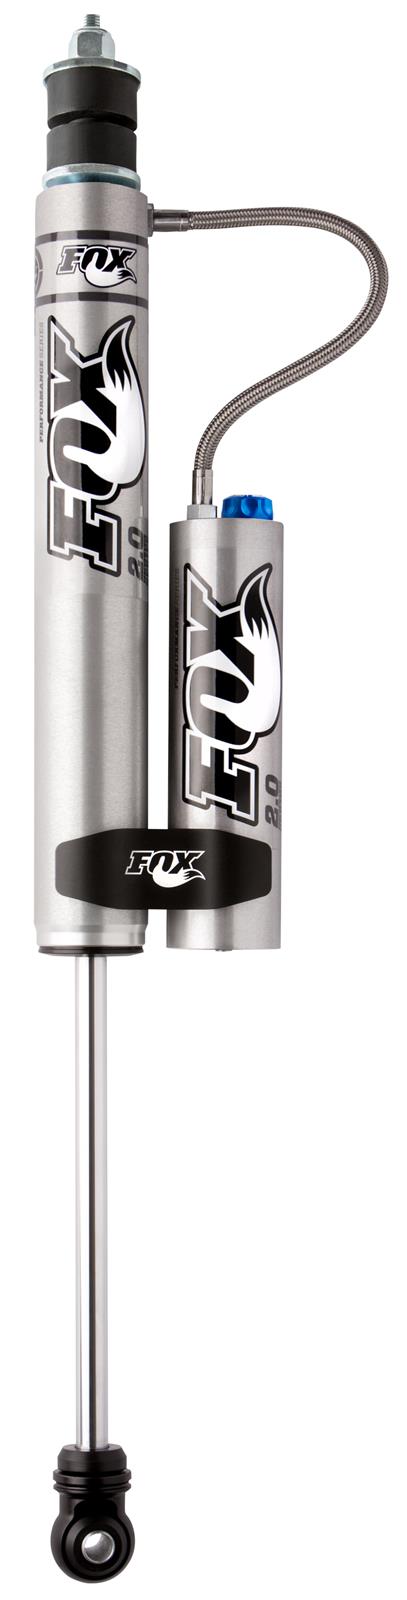 Fox Racing Shox 2.0 (FRONT)Performance Series Reservoir Smooth Body LSC Shocks (Single)